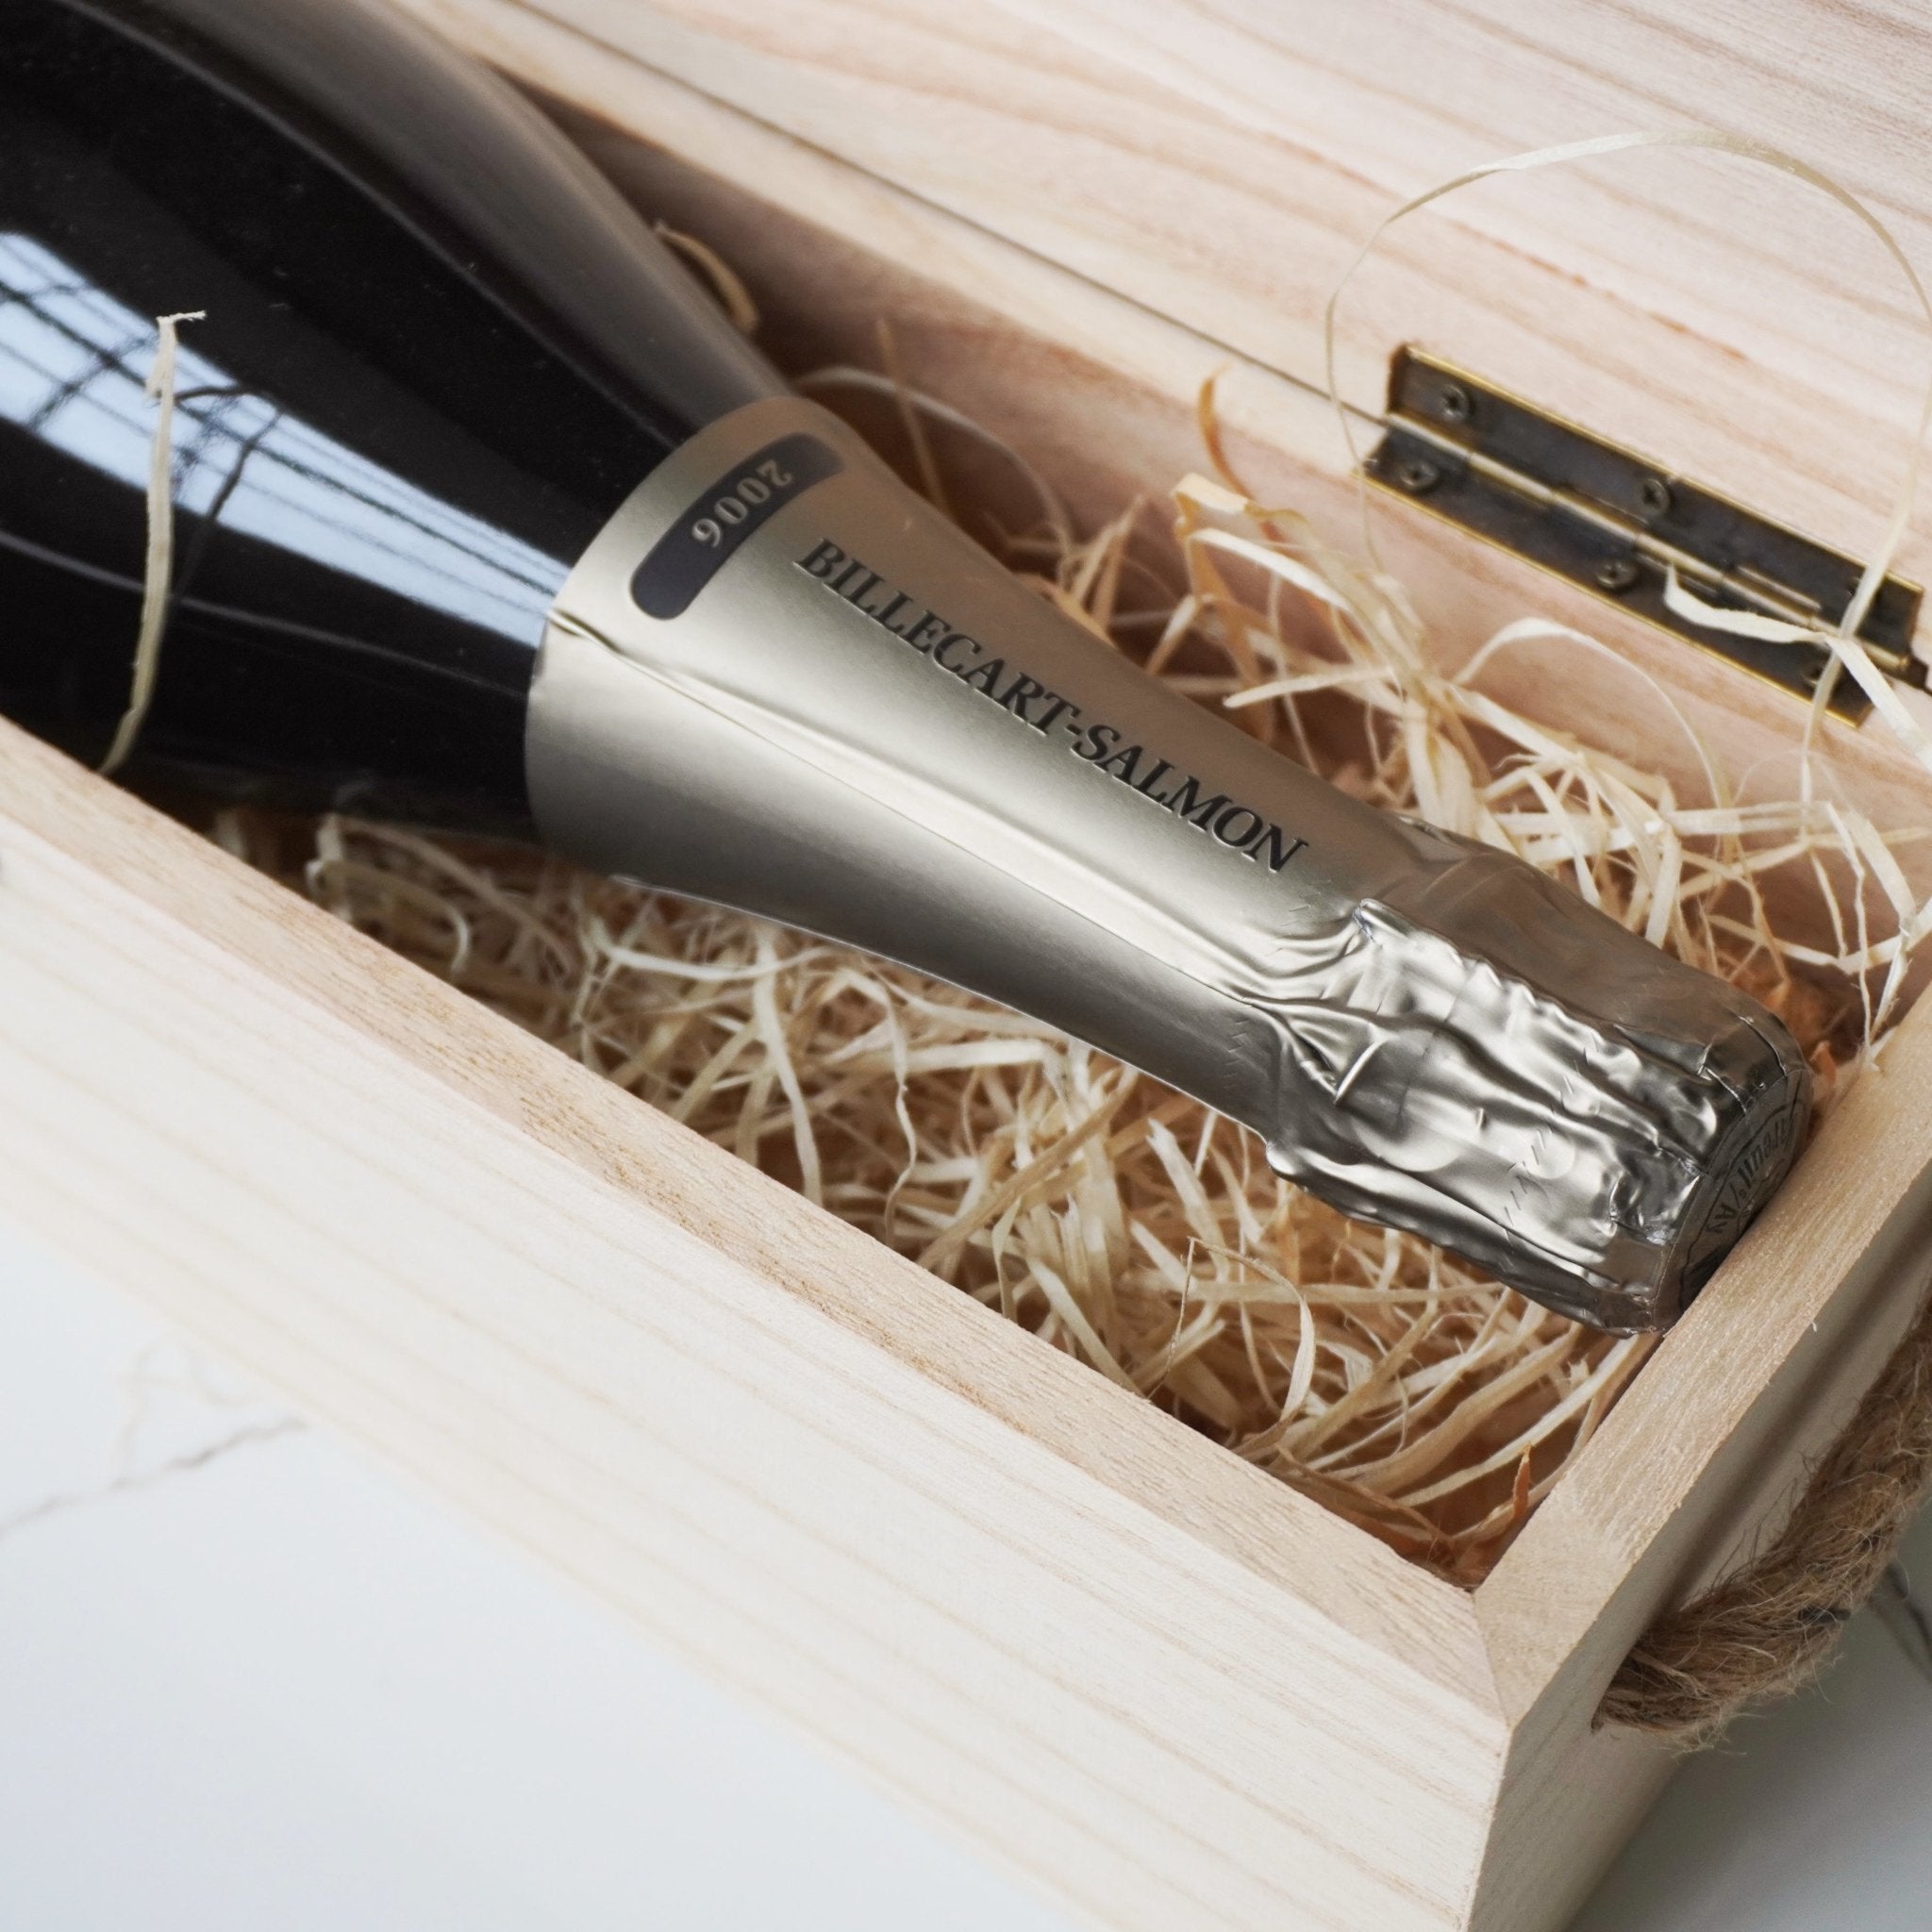 Engraved wine box